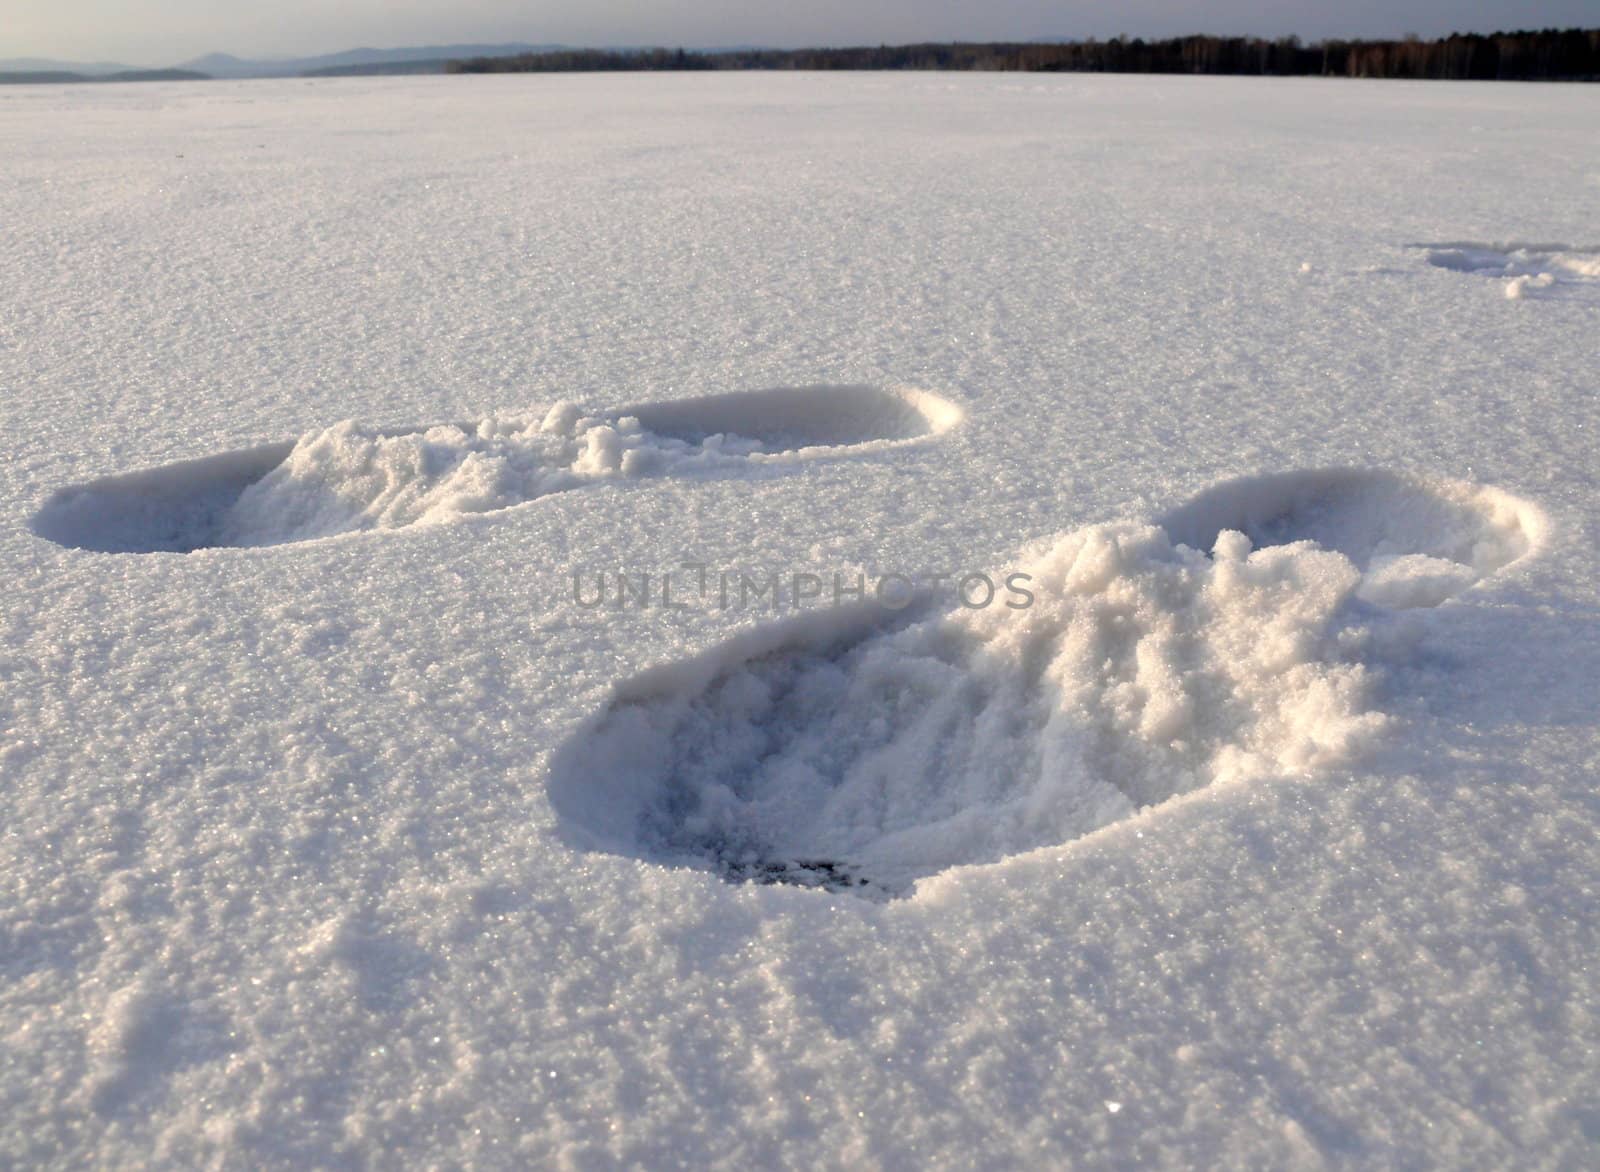 footprint in the snow by Stoyanov